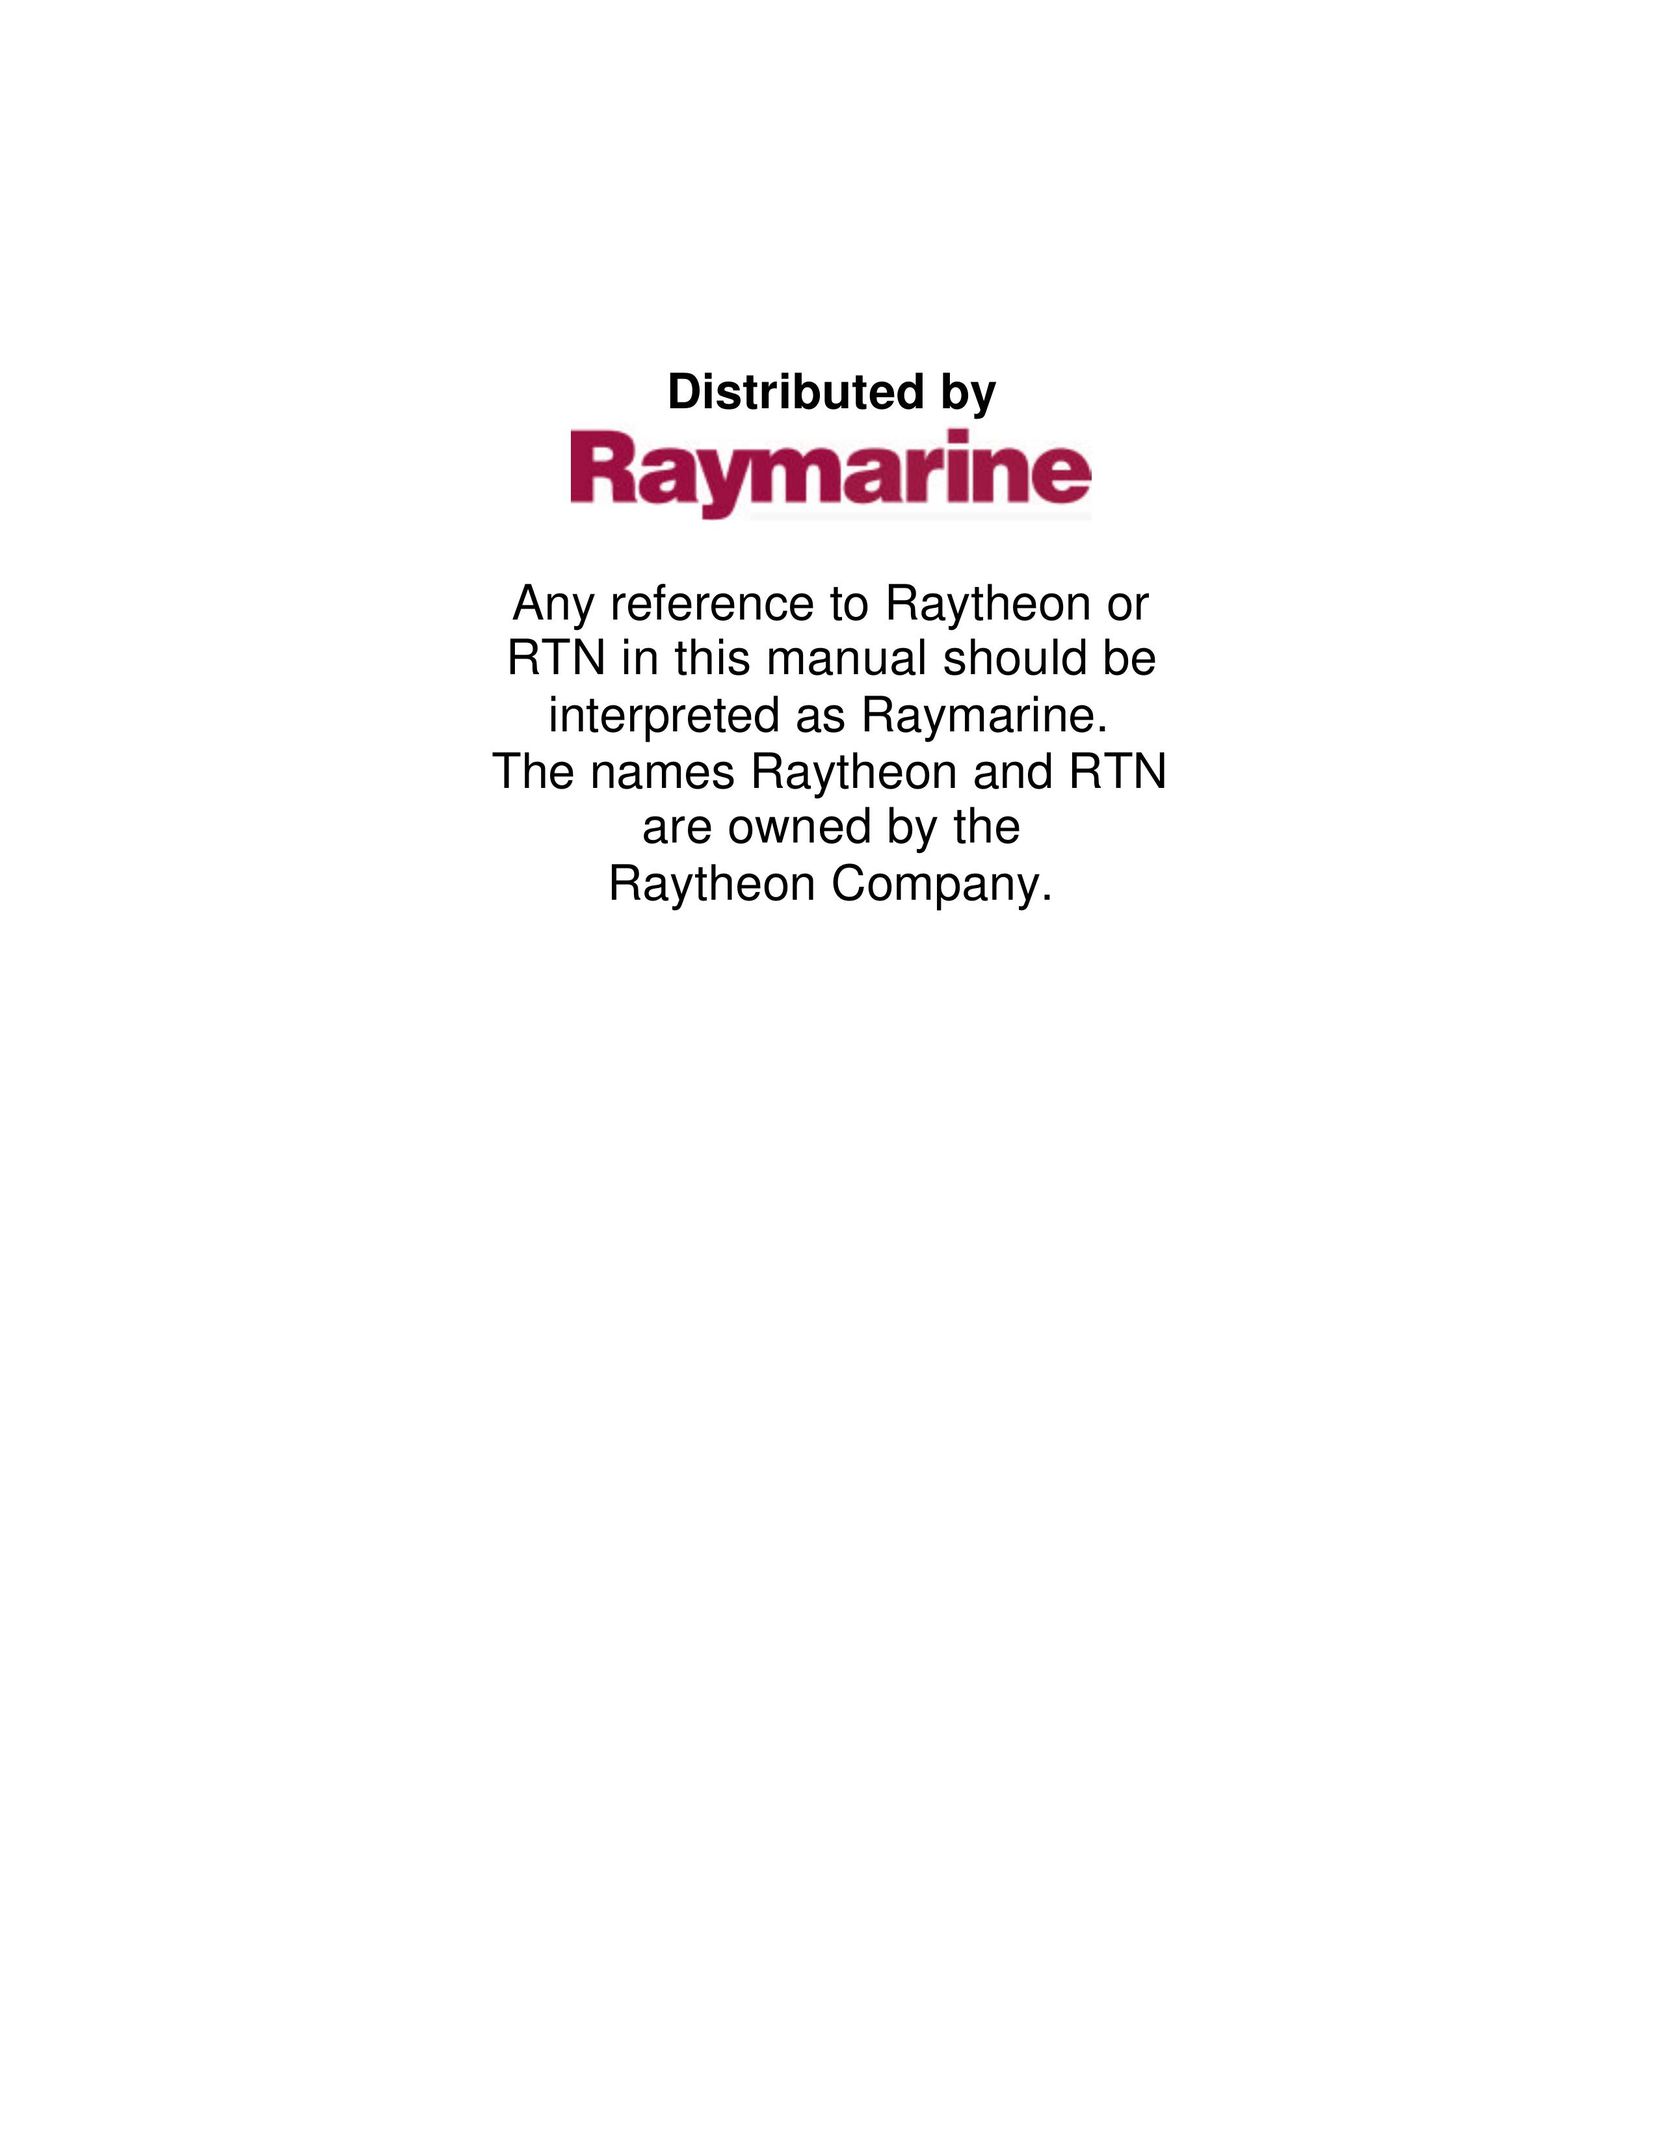 Raymarine RAY220 Cell Phone User Manual